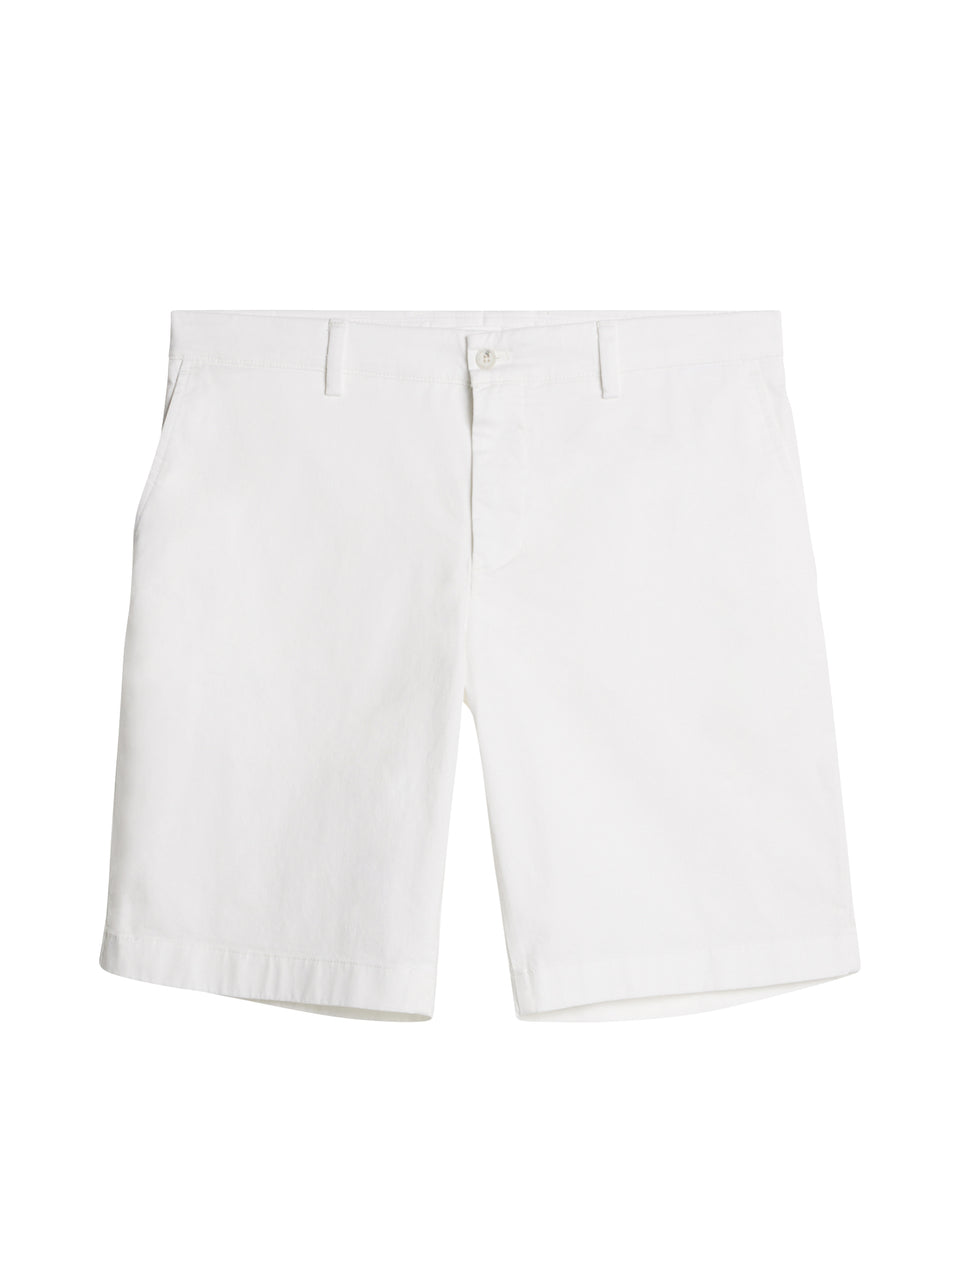 Nathan Cloud Satin Shorts / White